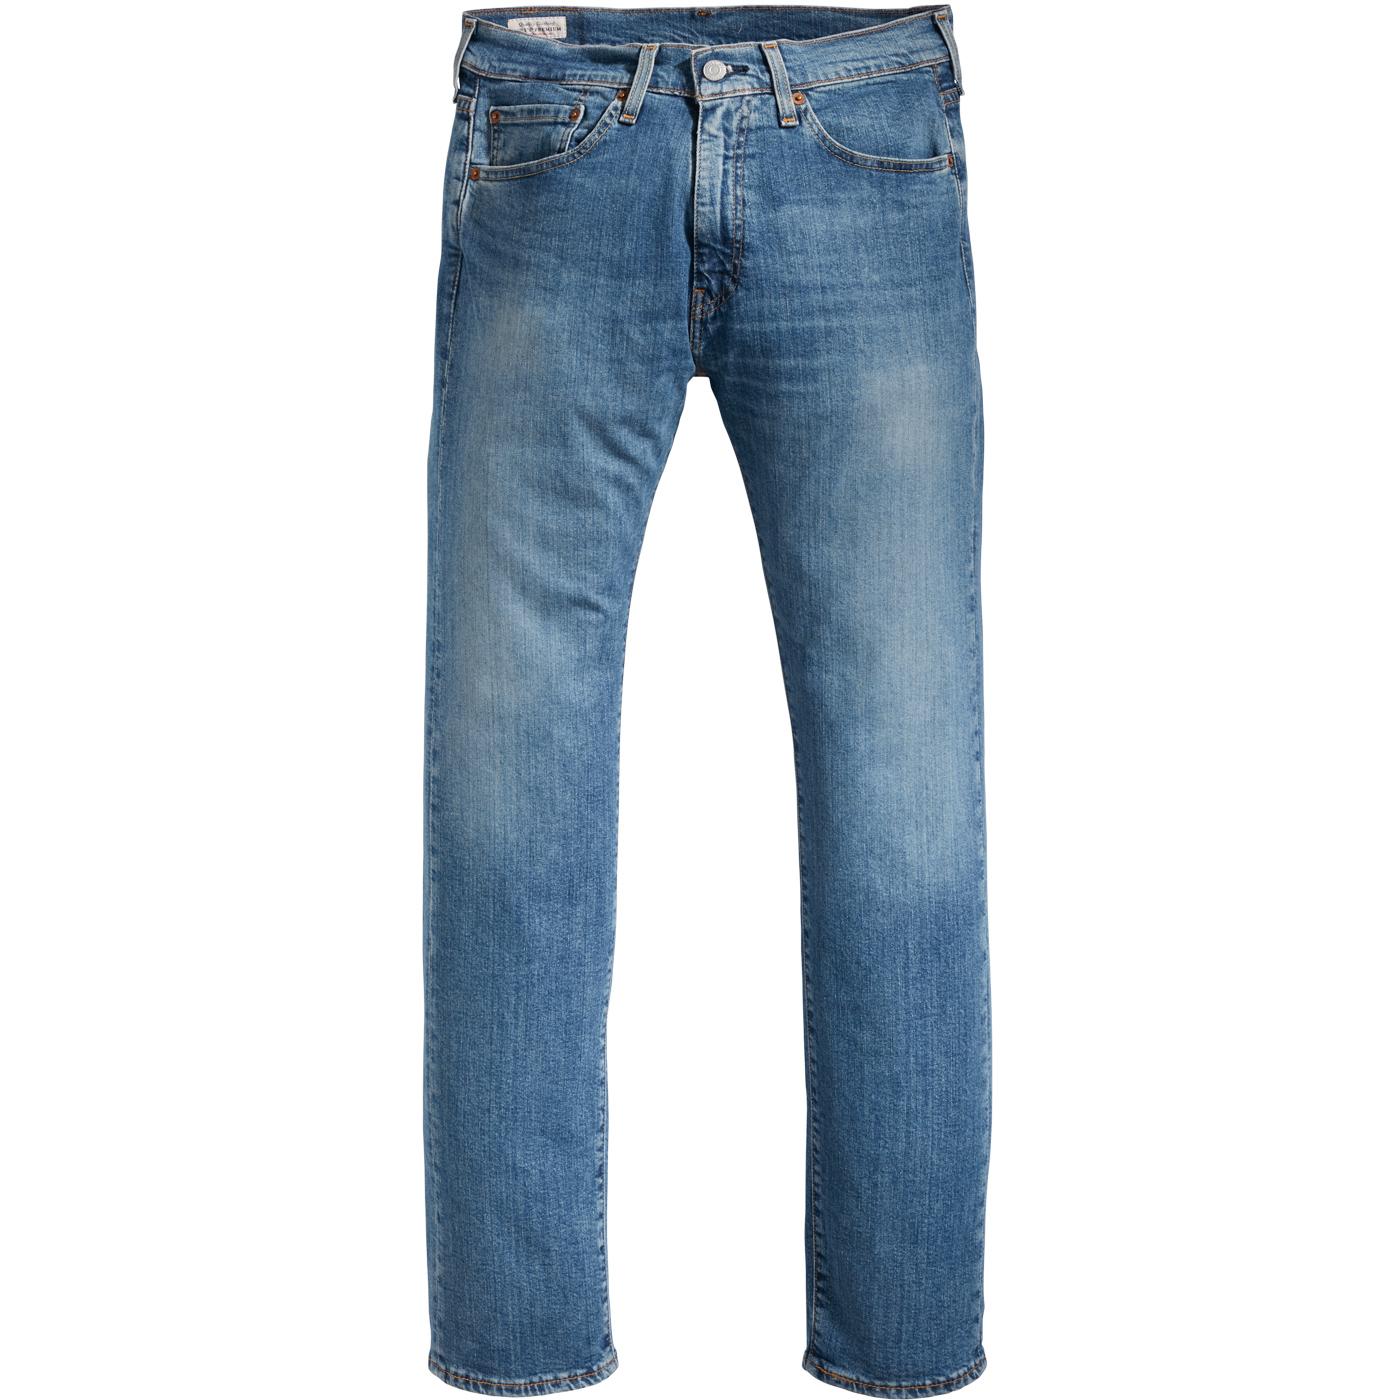 LEVI'S 502 Taper Men's Retro Jeans (Wagu Puddle)